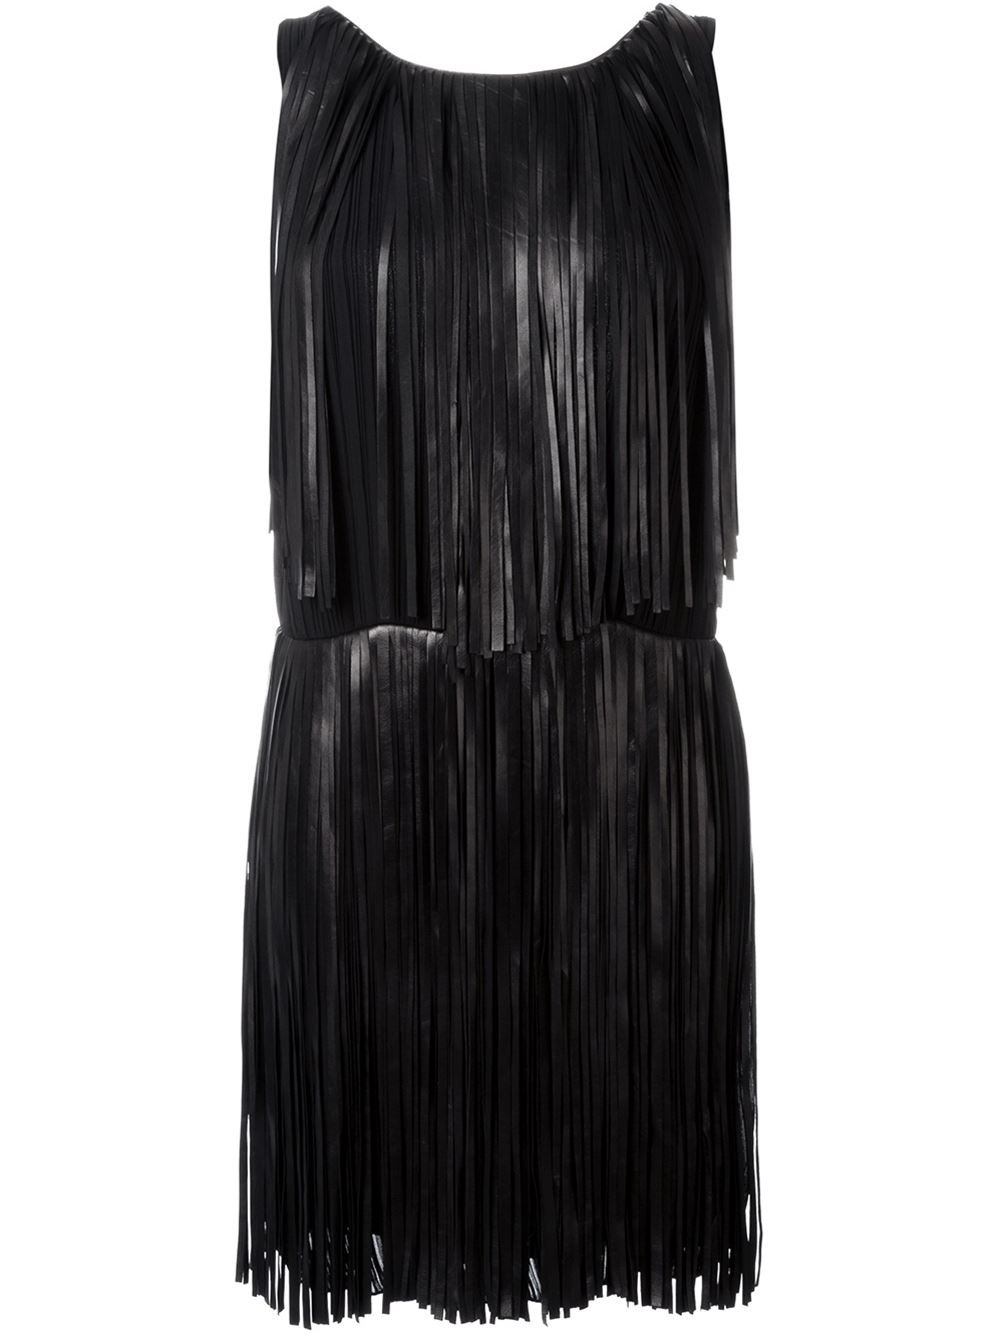 Sonia Rykiel Sleeveless Fringed Dress In Black | ModeSens